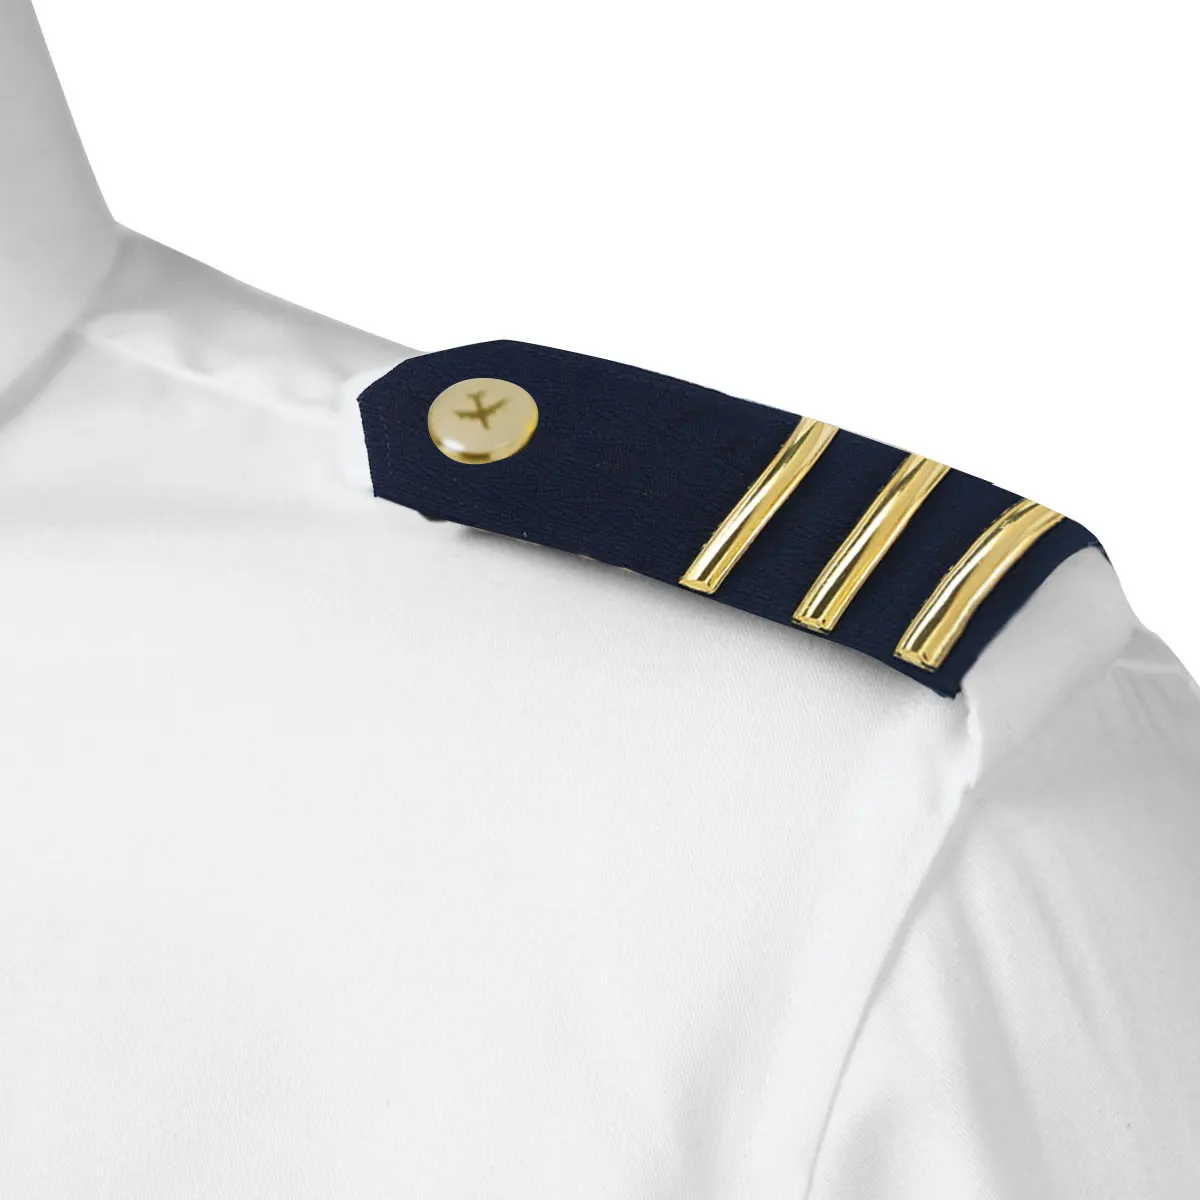 PAIR Pilot Yacht Marine Maval Shoulder Rank Epaulets Gold Anchor on Woolen Cloth 